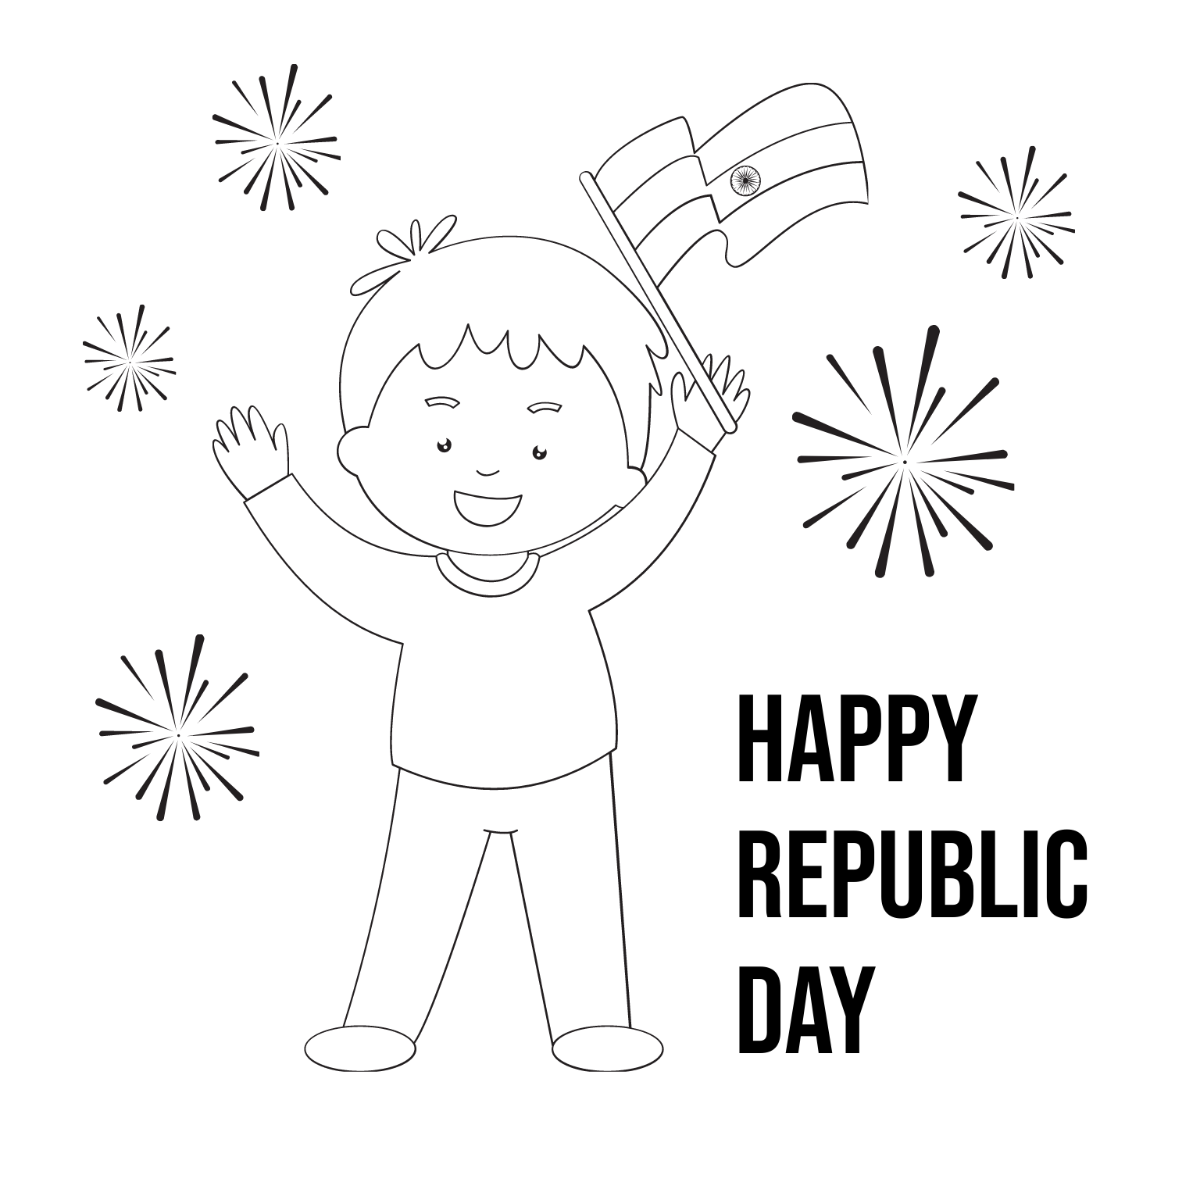 India 70th Republic Day. 26 Jan 2019, Happy 70th Republic Day | by Mansi DM  | Medium